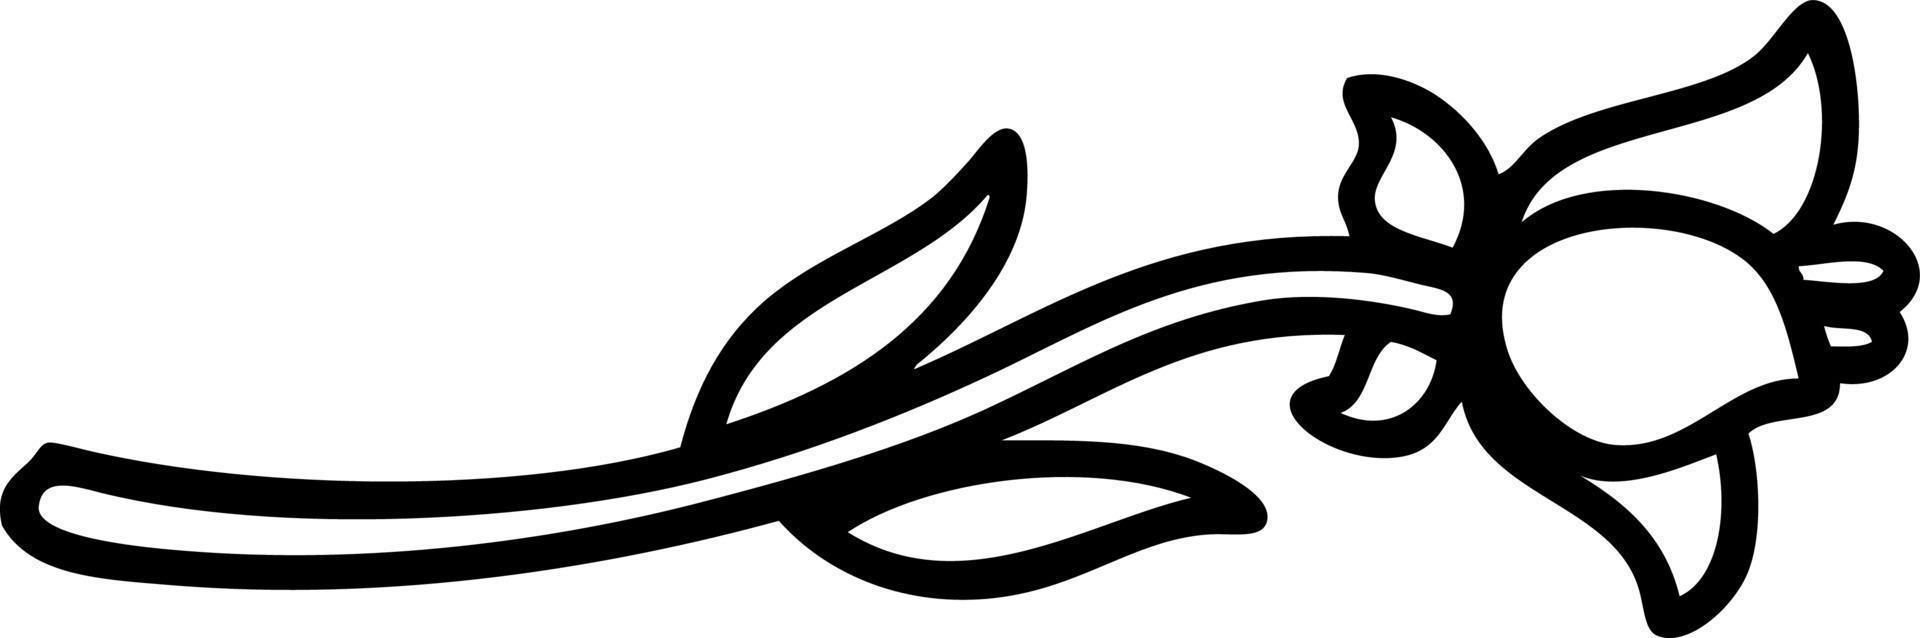 tatuering i svart linje stil av en lilja vektor